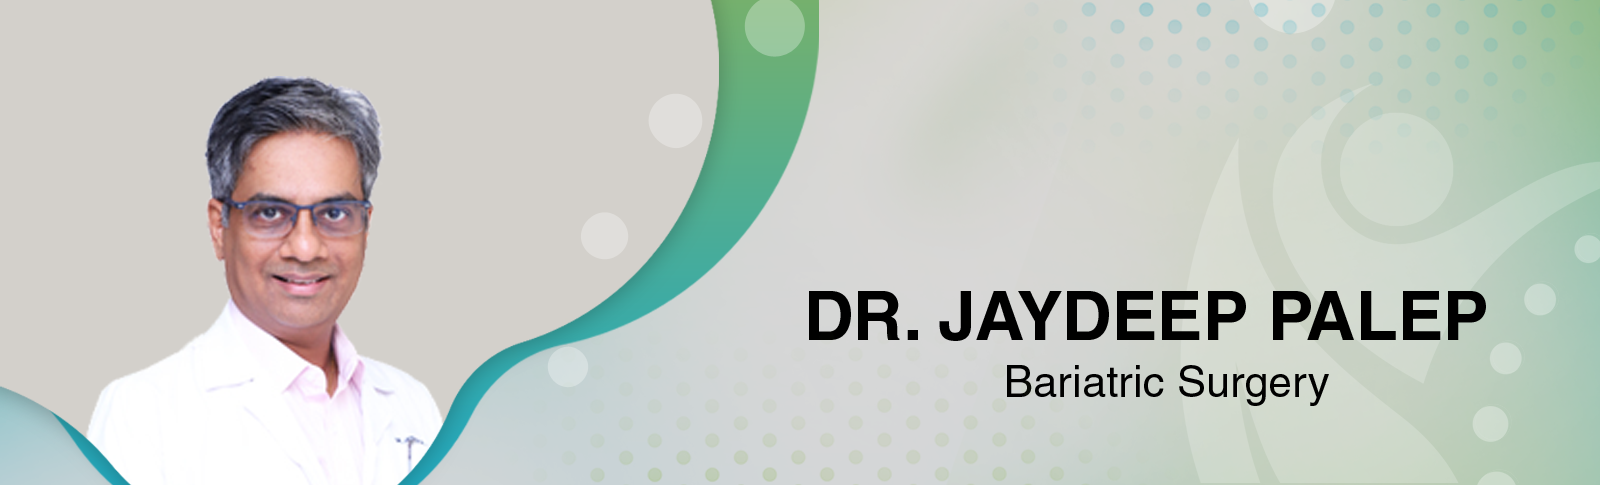 Dr. Jaydeep Palep